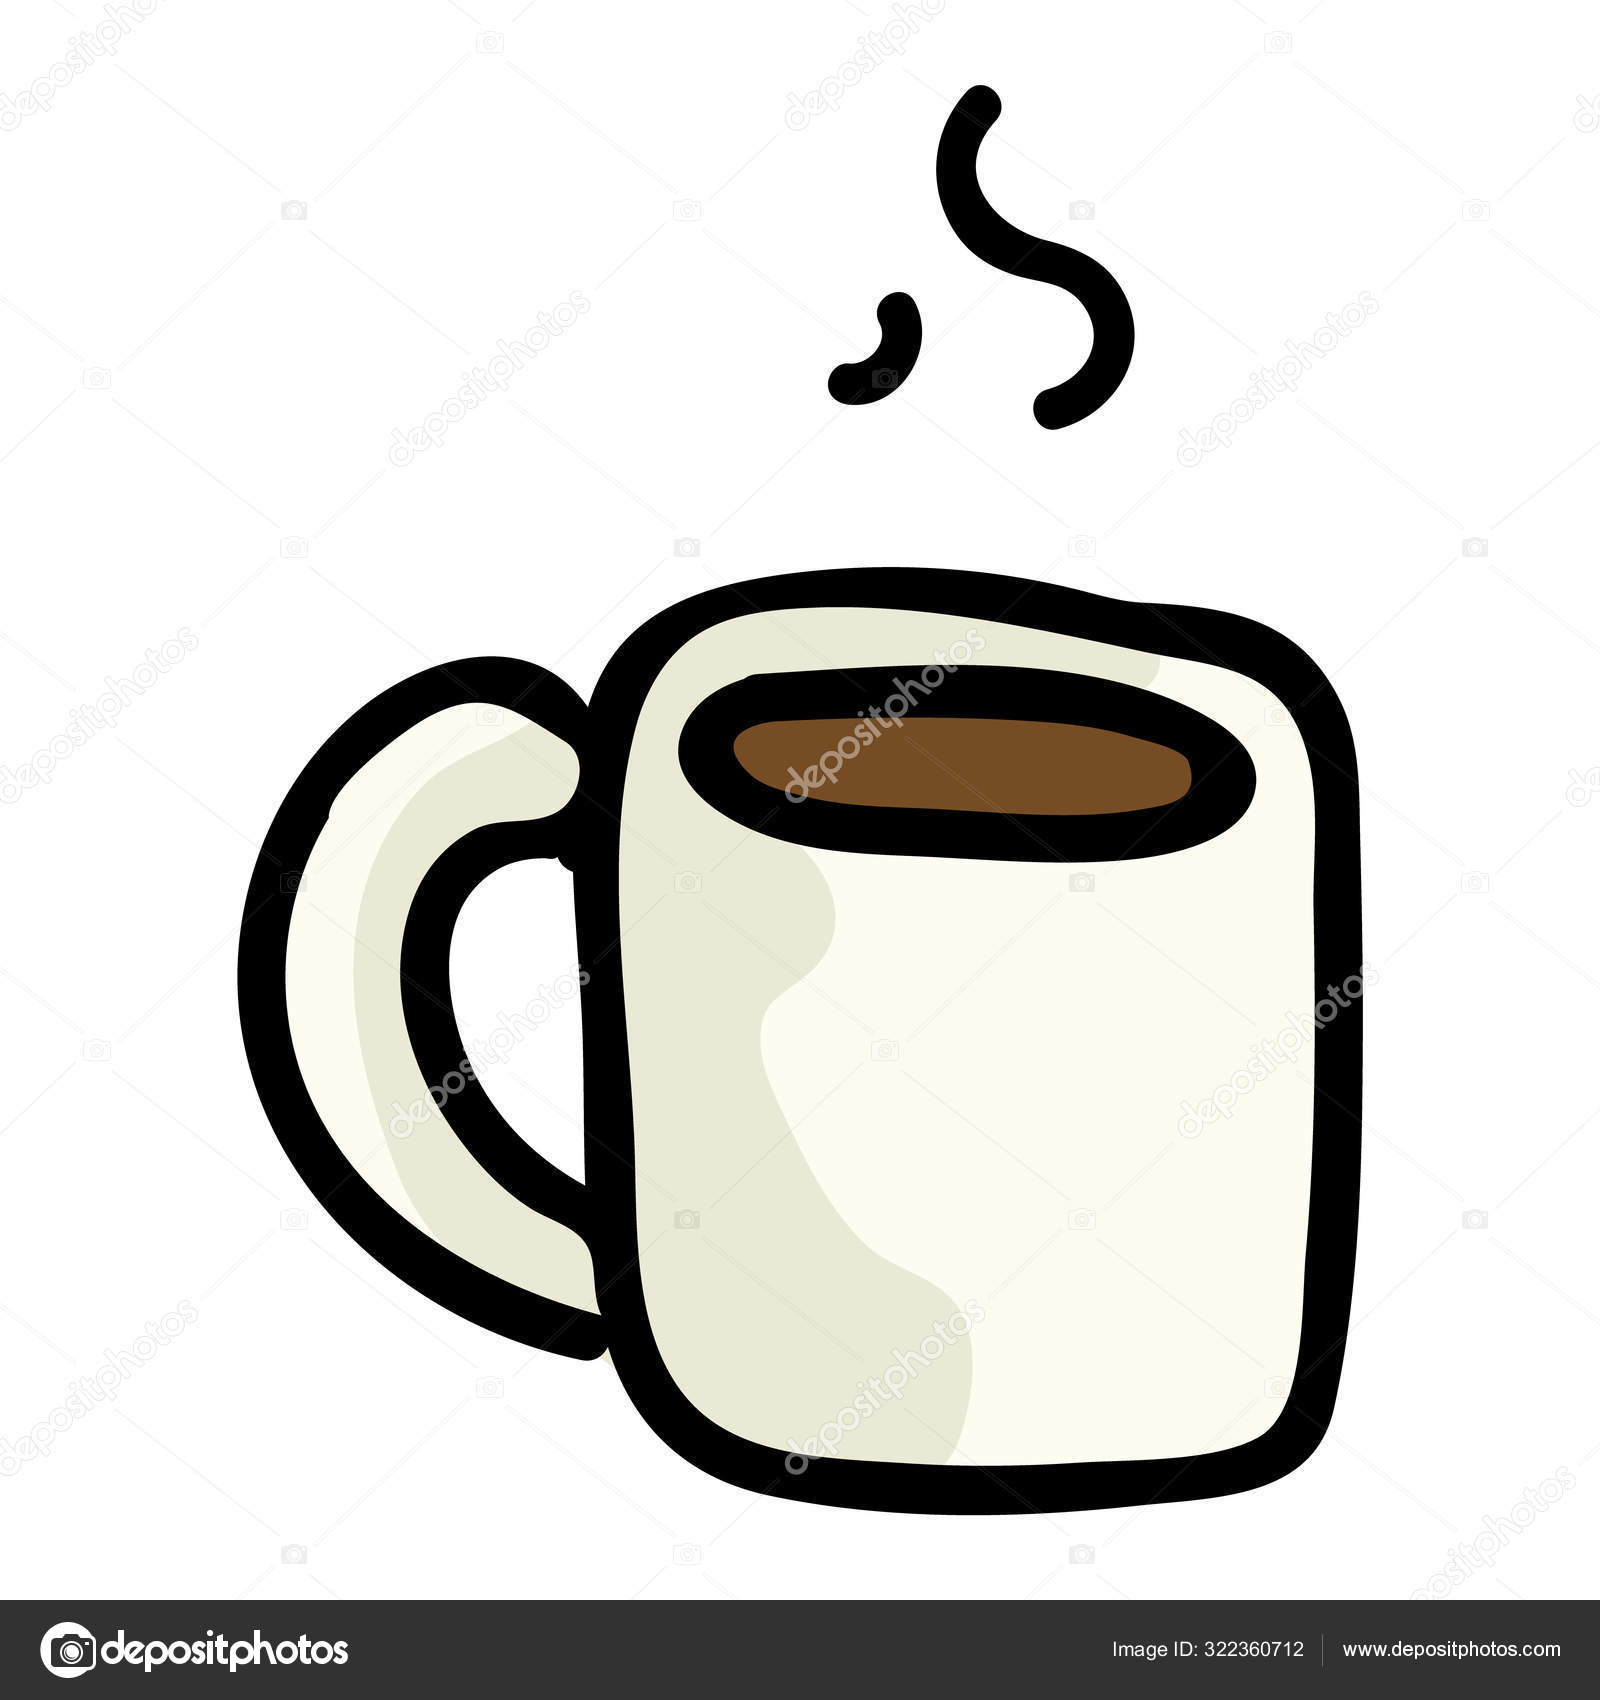 https://st3.depositphotos.com/18175584/32236/v/1600/depositphotos_322360712-stock-illustration-cute-coffee-mug-cartoon-vector.jpg